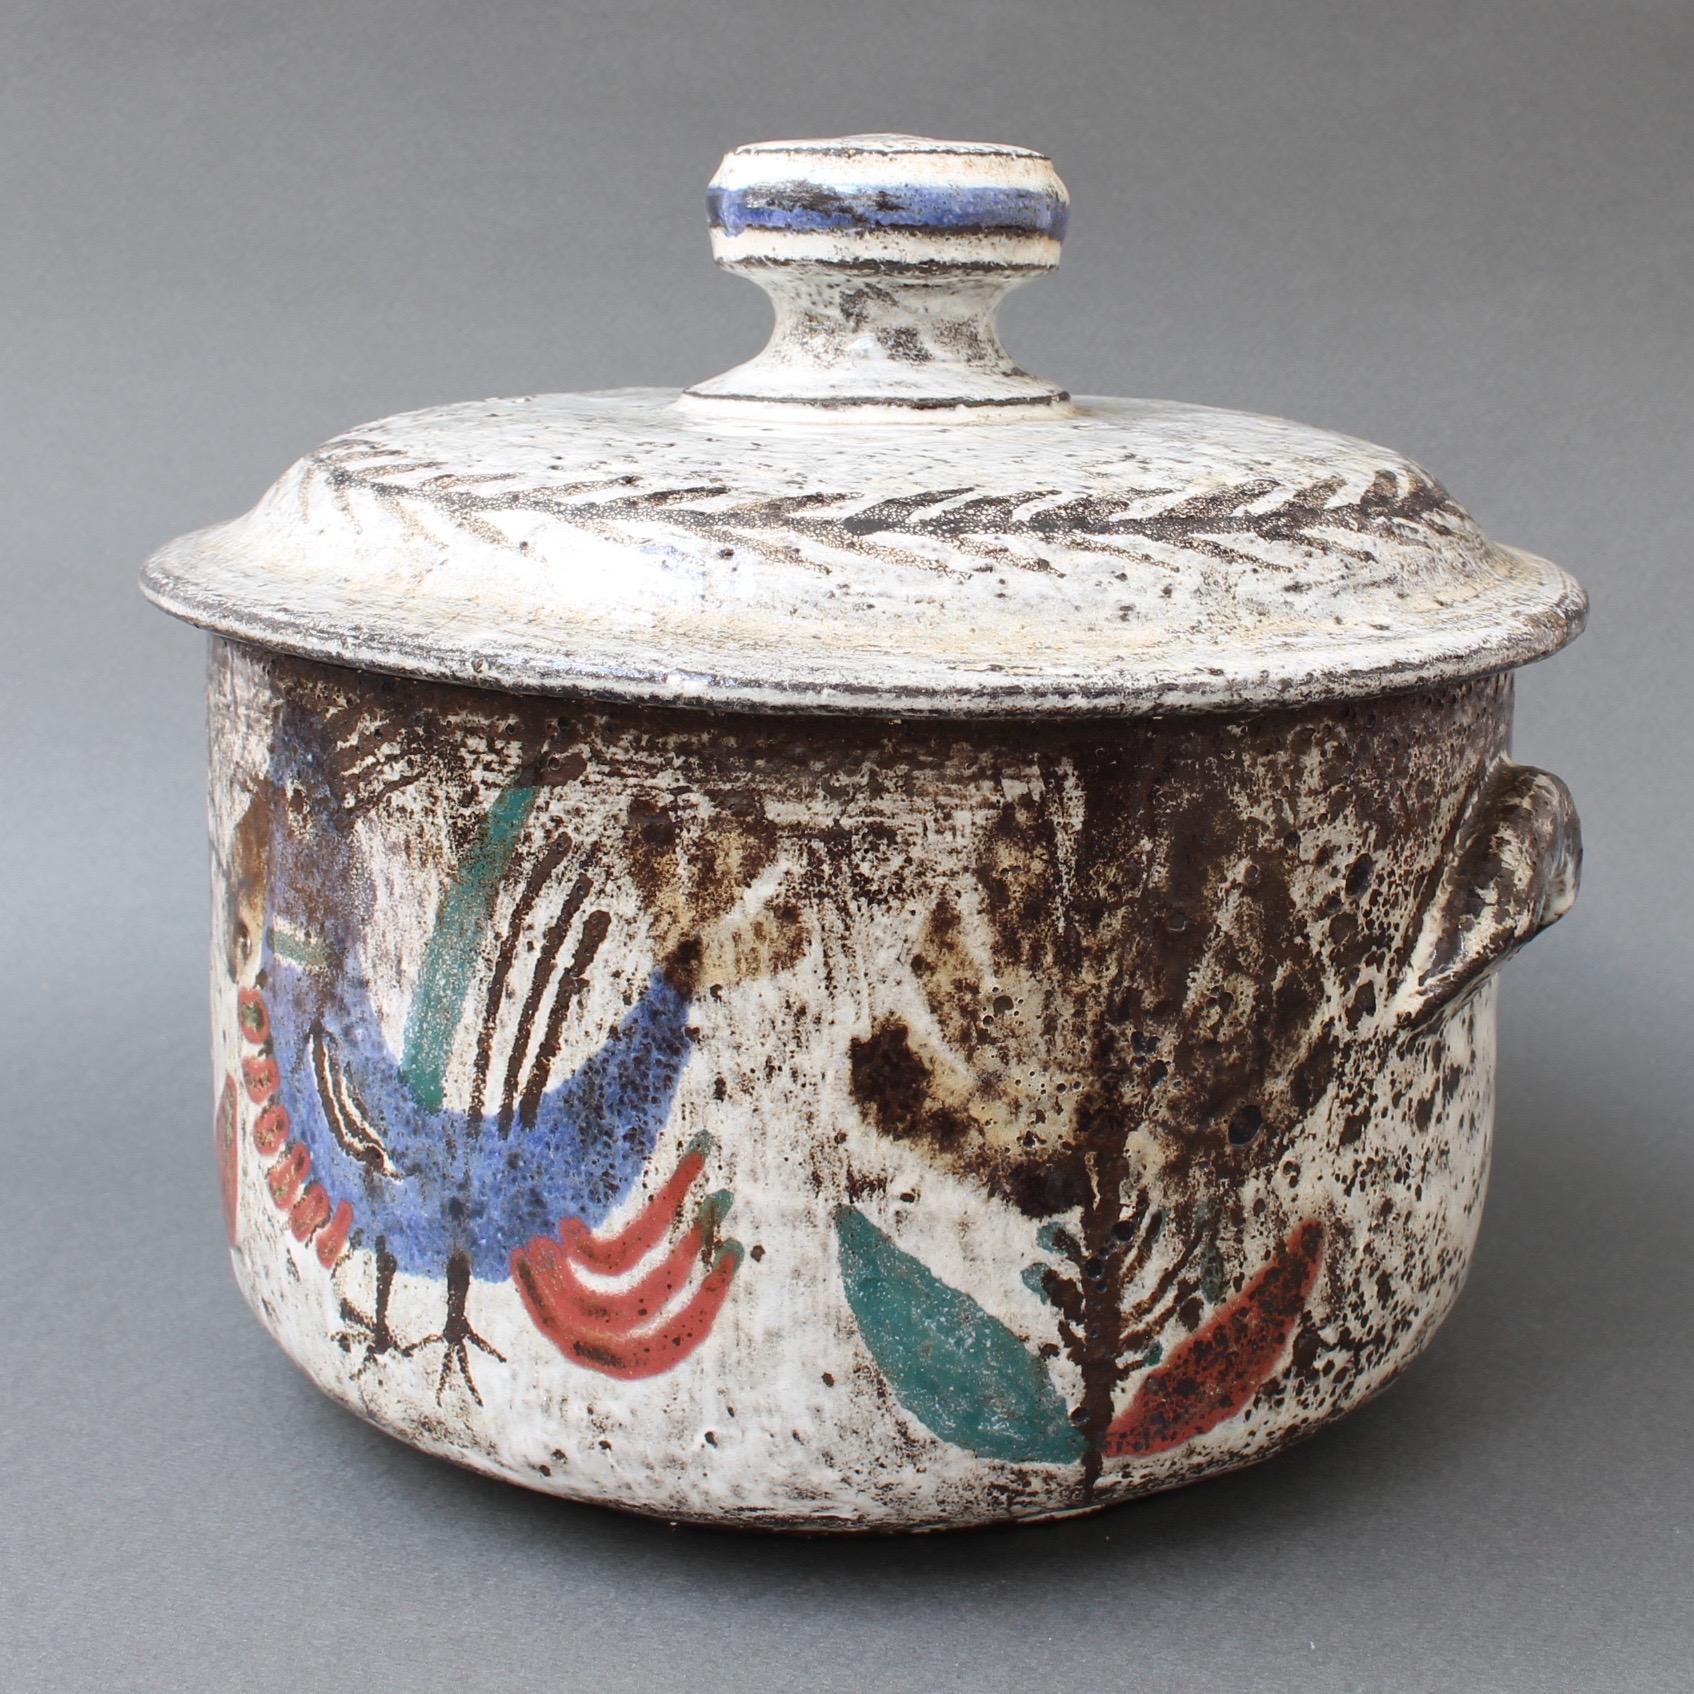 decorative ceramic bowl with lid